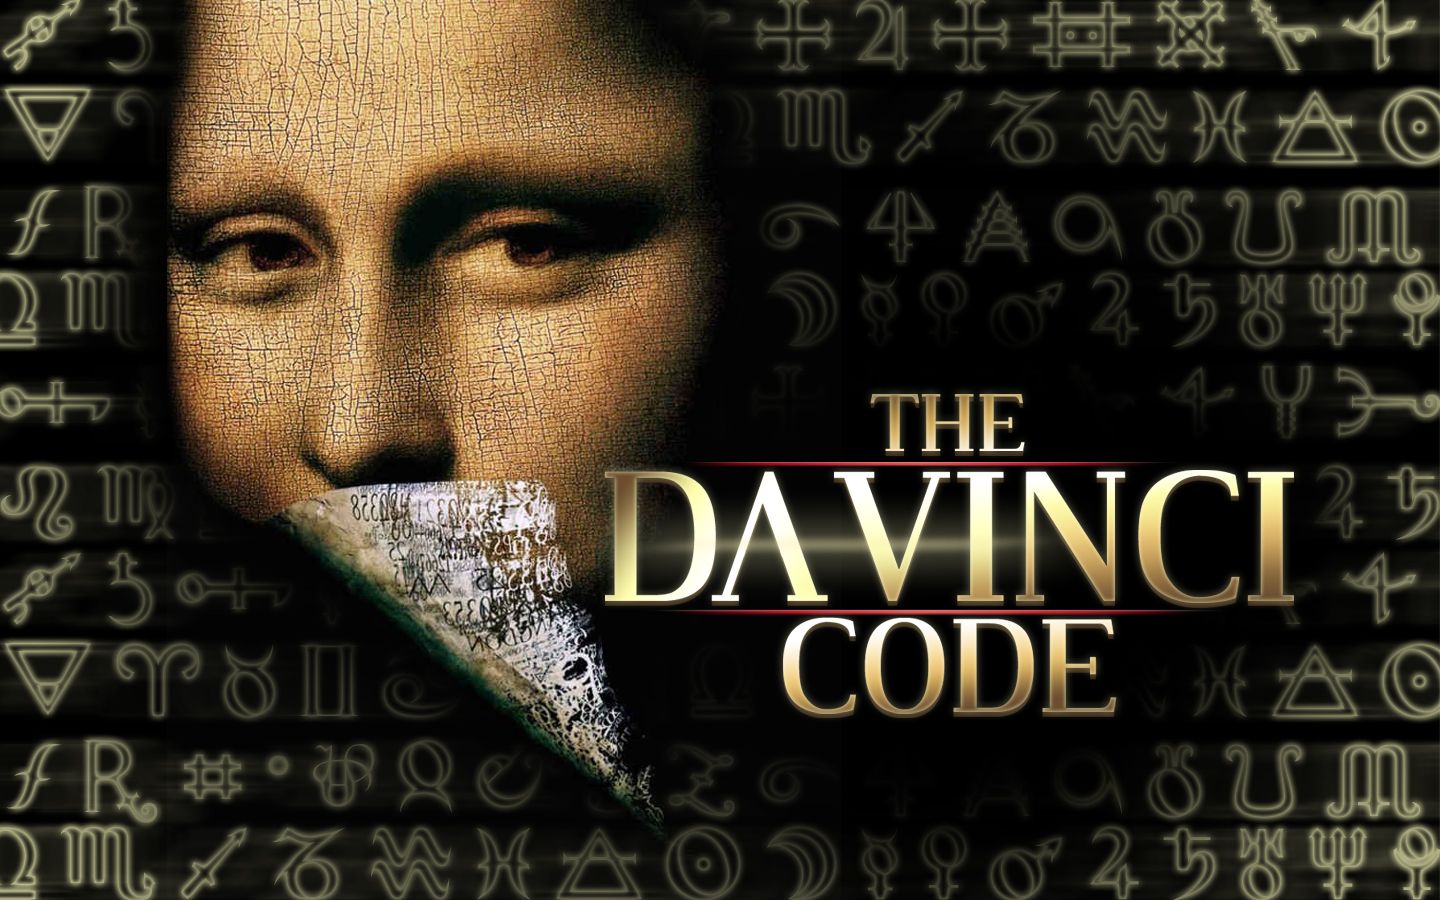 The Da Vinci Code wallpaper, Movie, HQ The Da Vinci Code pictureK Wallpaper 2019